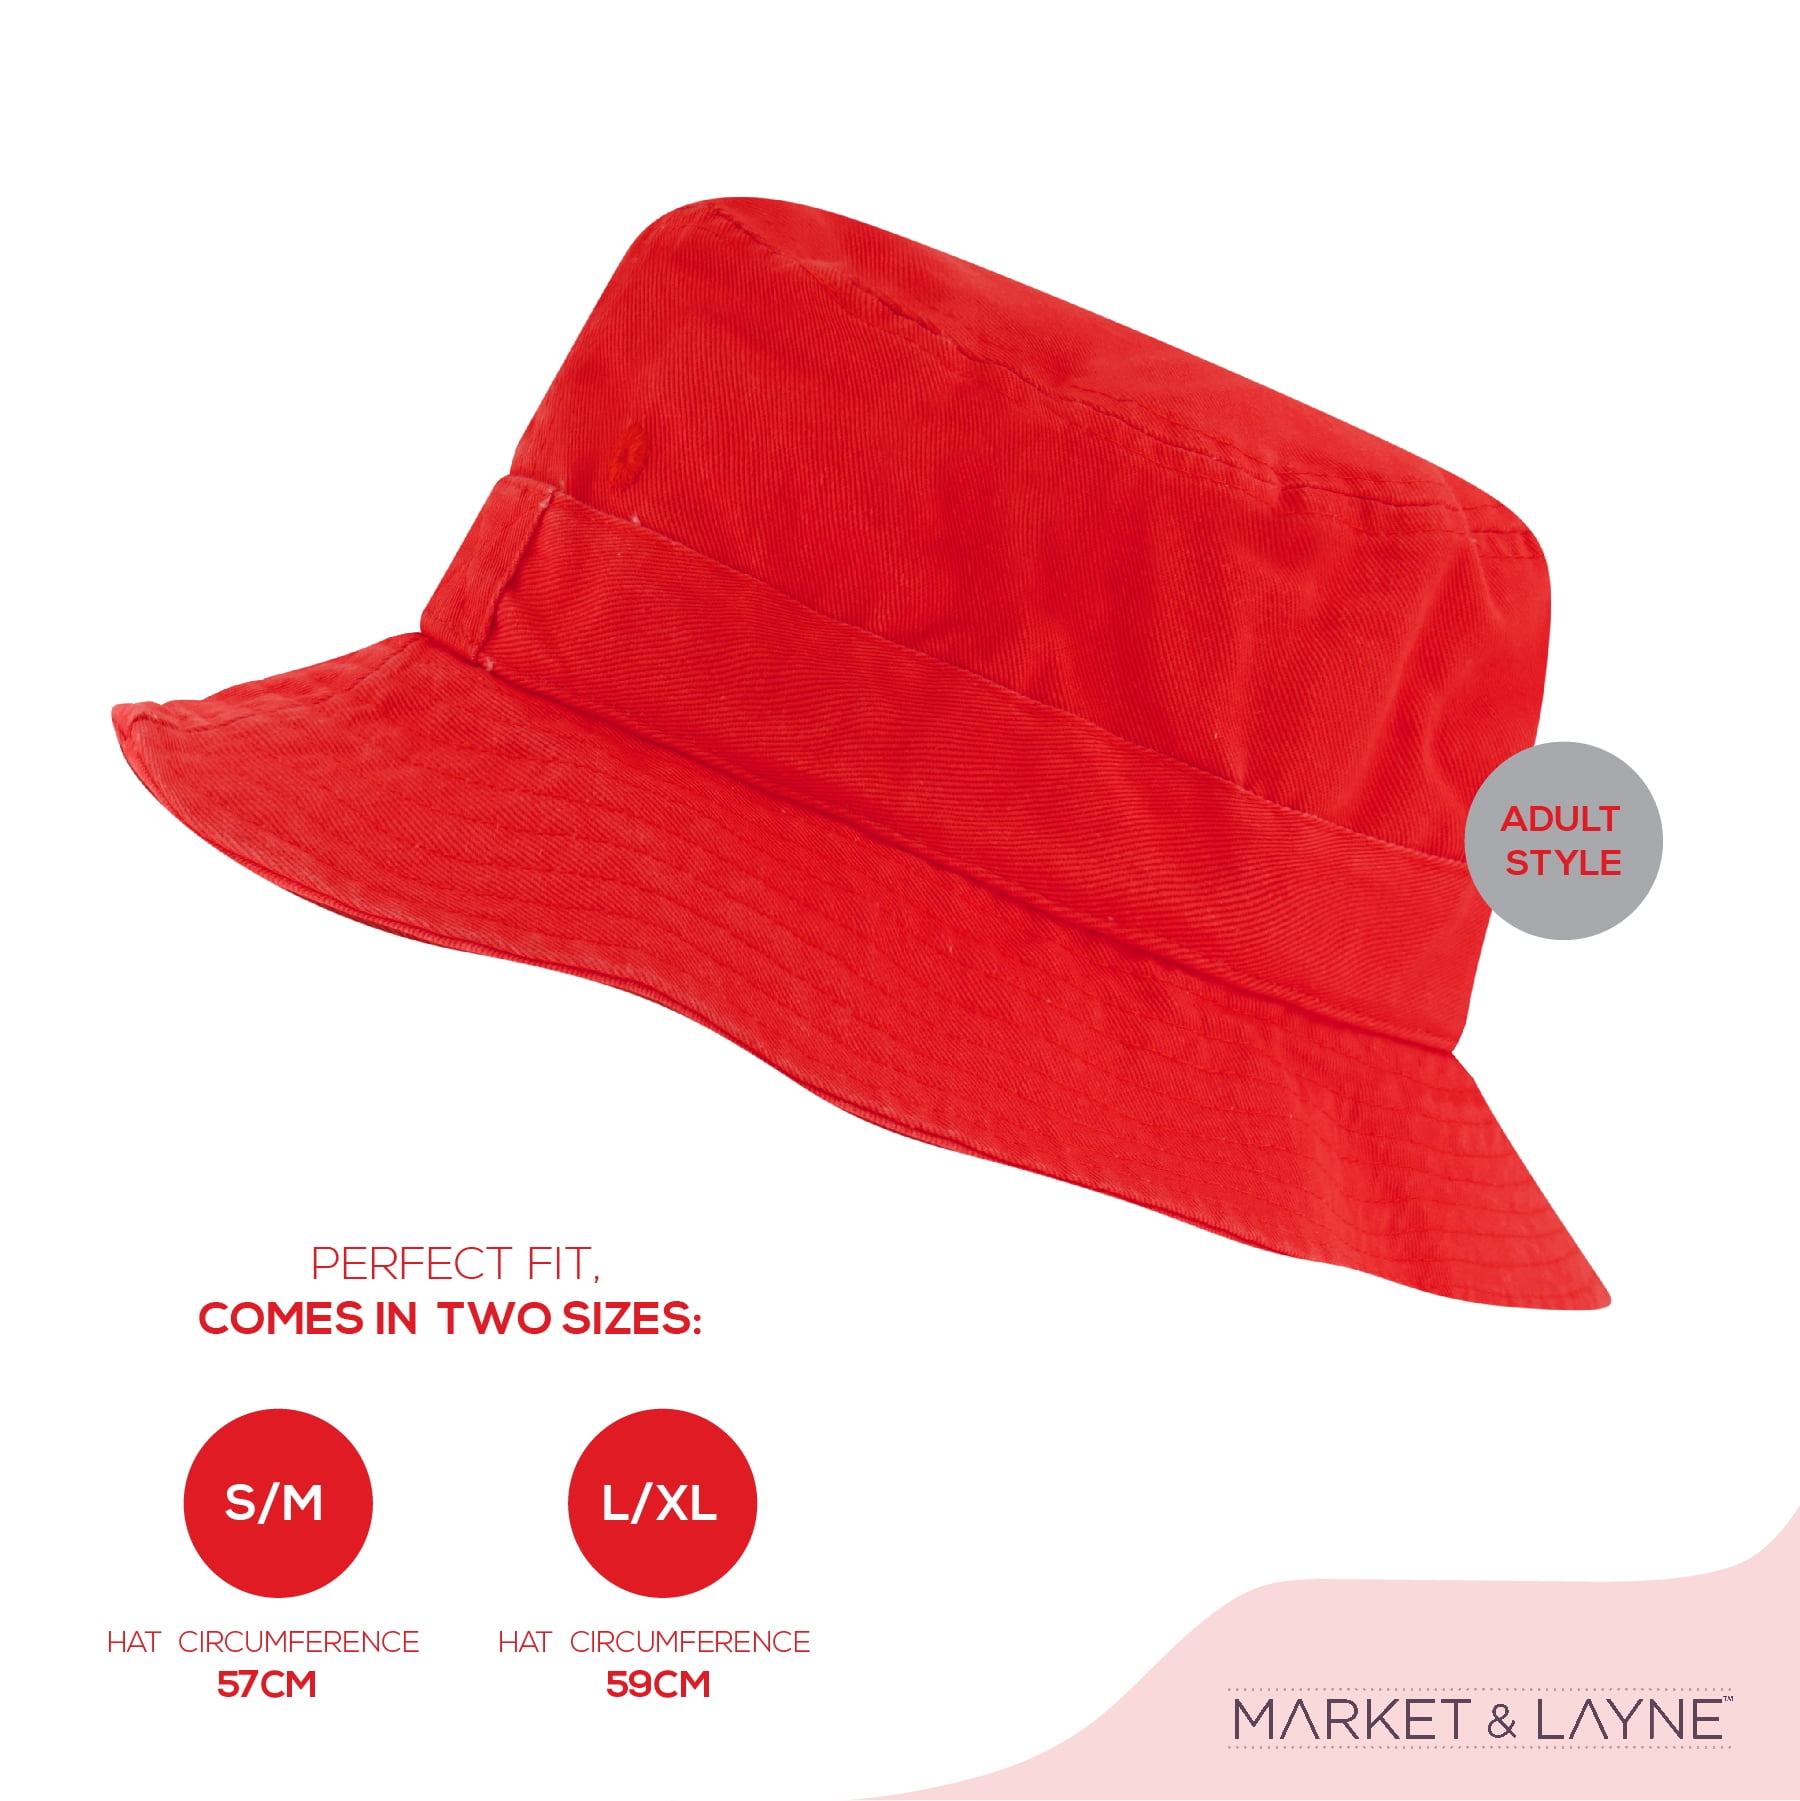 Market & Layne Unisex Red Bucket Hat for Adult & Teens - Medium/Large